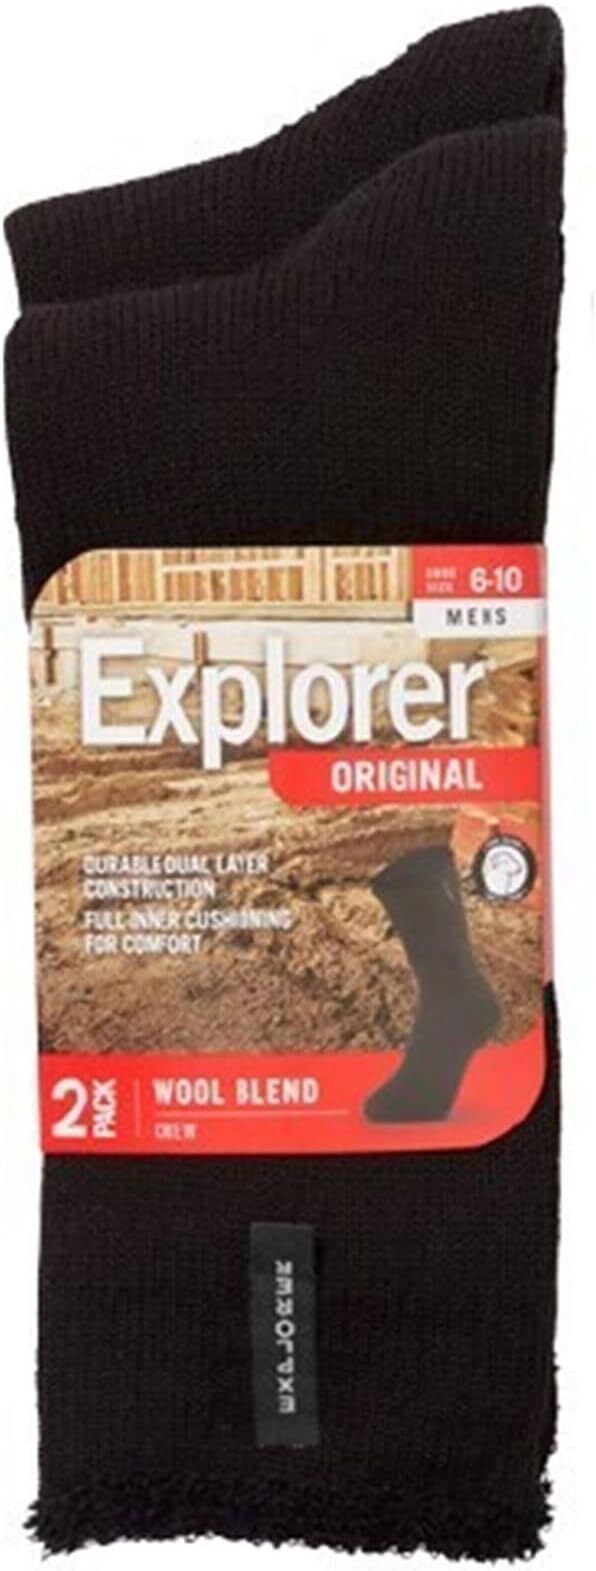 Bonds Explorer Original Breathable Comfortable Socks 2 Pack Ks S11392